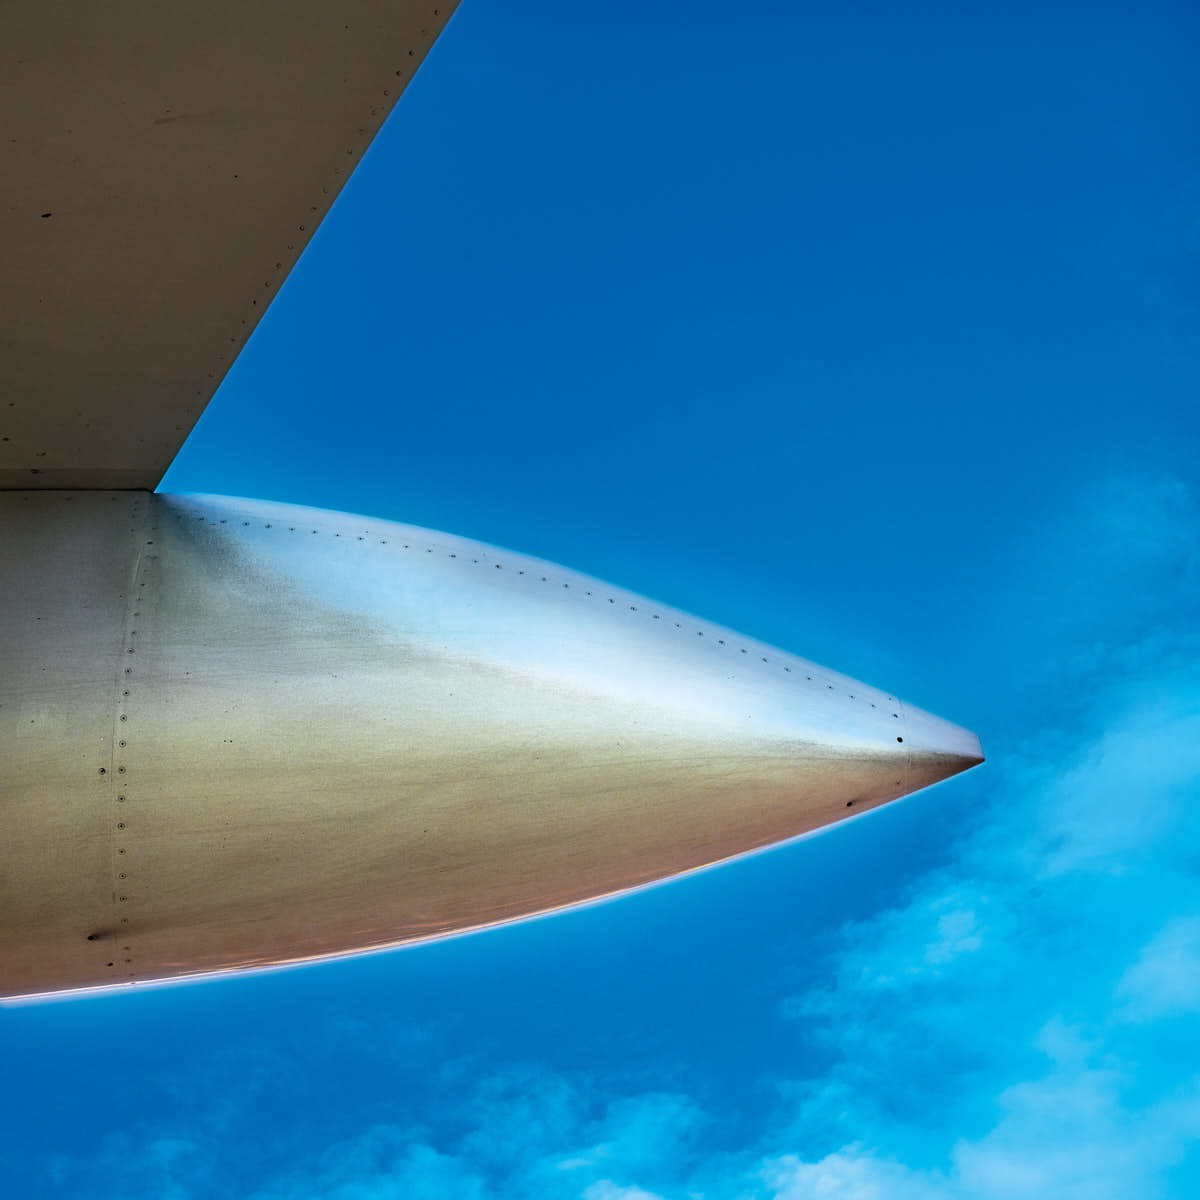 flugzeug-turbinenspitze-vor-blauem-himmel-detail